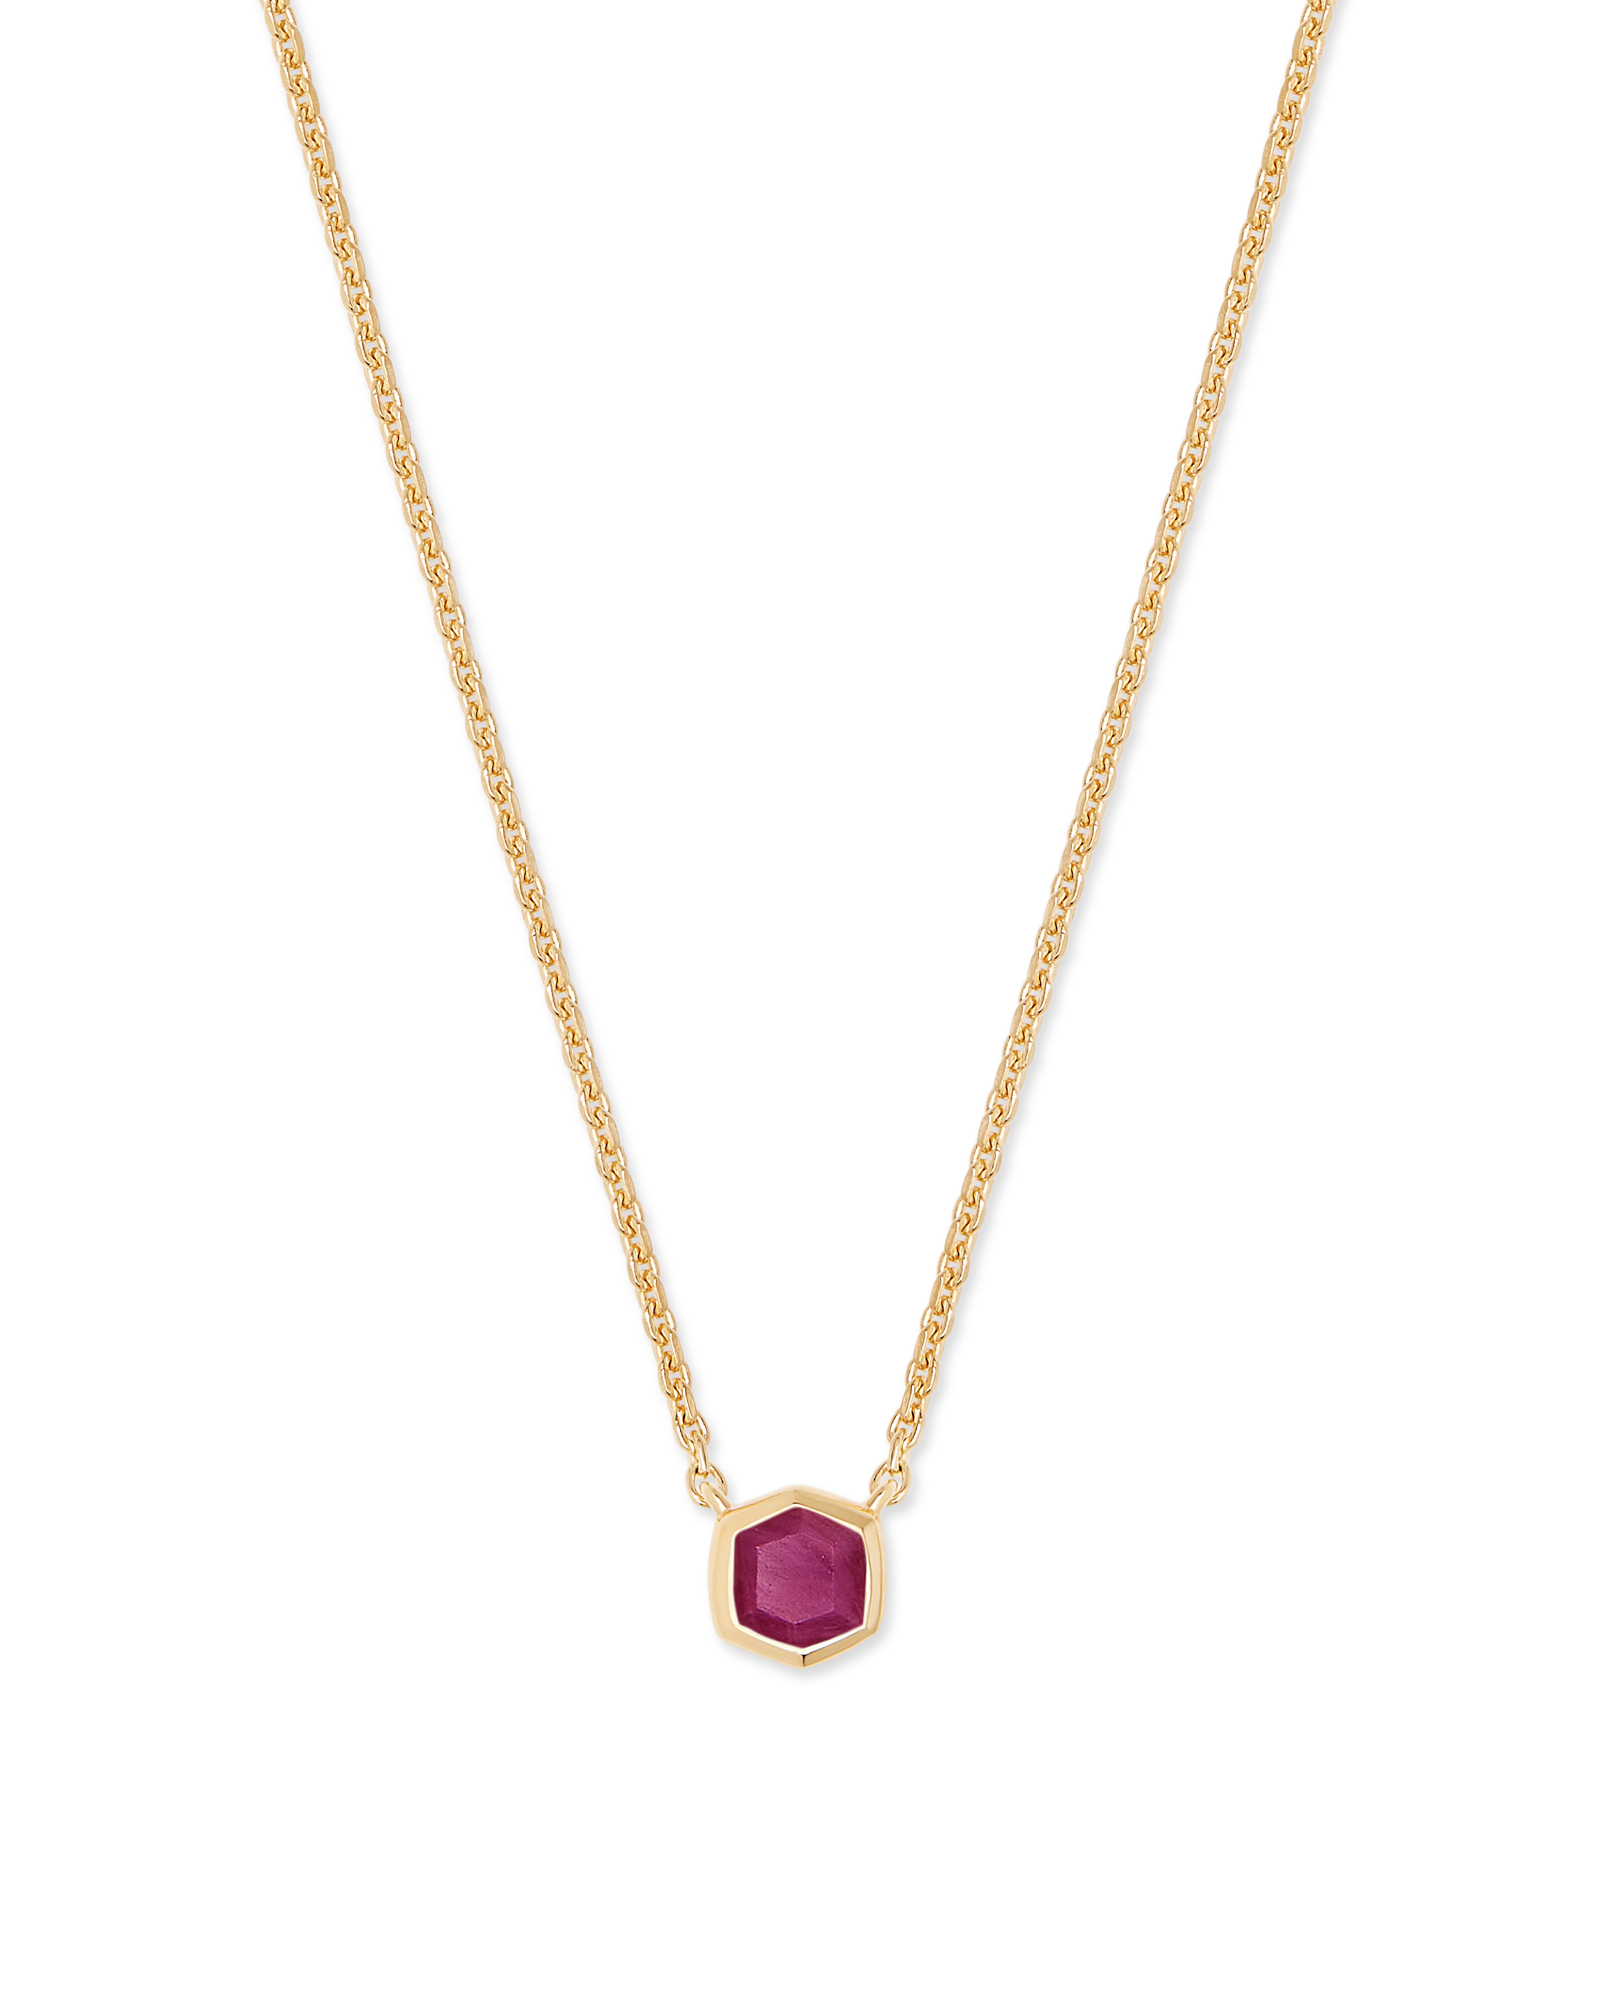 Davie 18k Gold Vermeil Pendant Necklace in Ruby | Kendra Scott